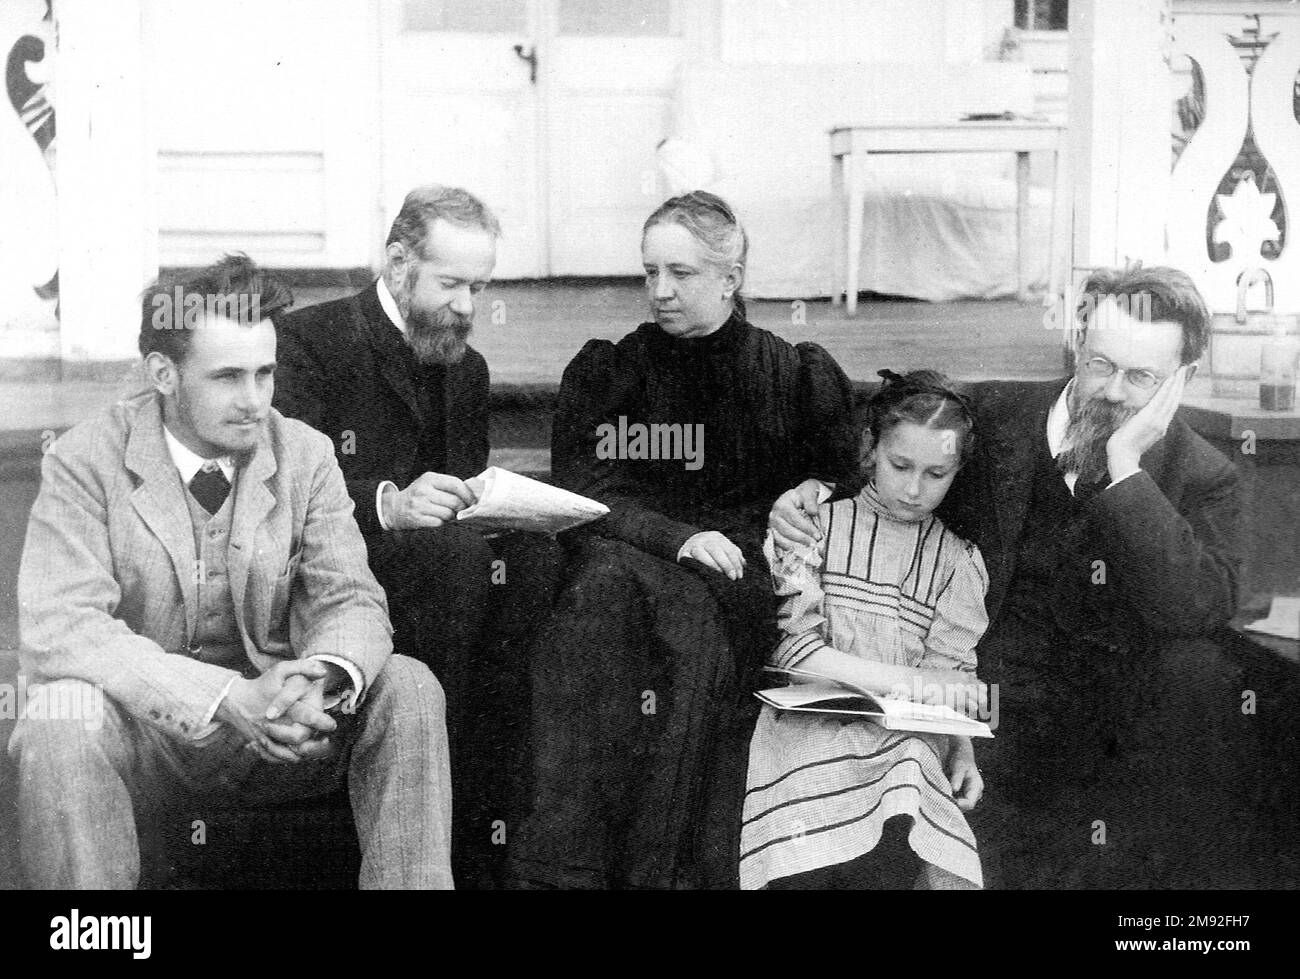 La famiglia Vernadsky. Da destra a sinistra - Vladimir Ivanovich Vernadsky, figlia Nina, moglie Natalya Yegorovna, suo fratello Pavel Yegorovich Staritsky e figlio George ca. 1 settembre 1908 Foto Stock